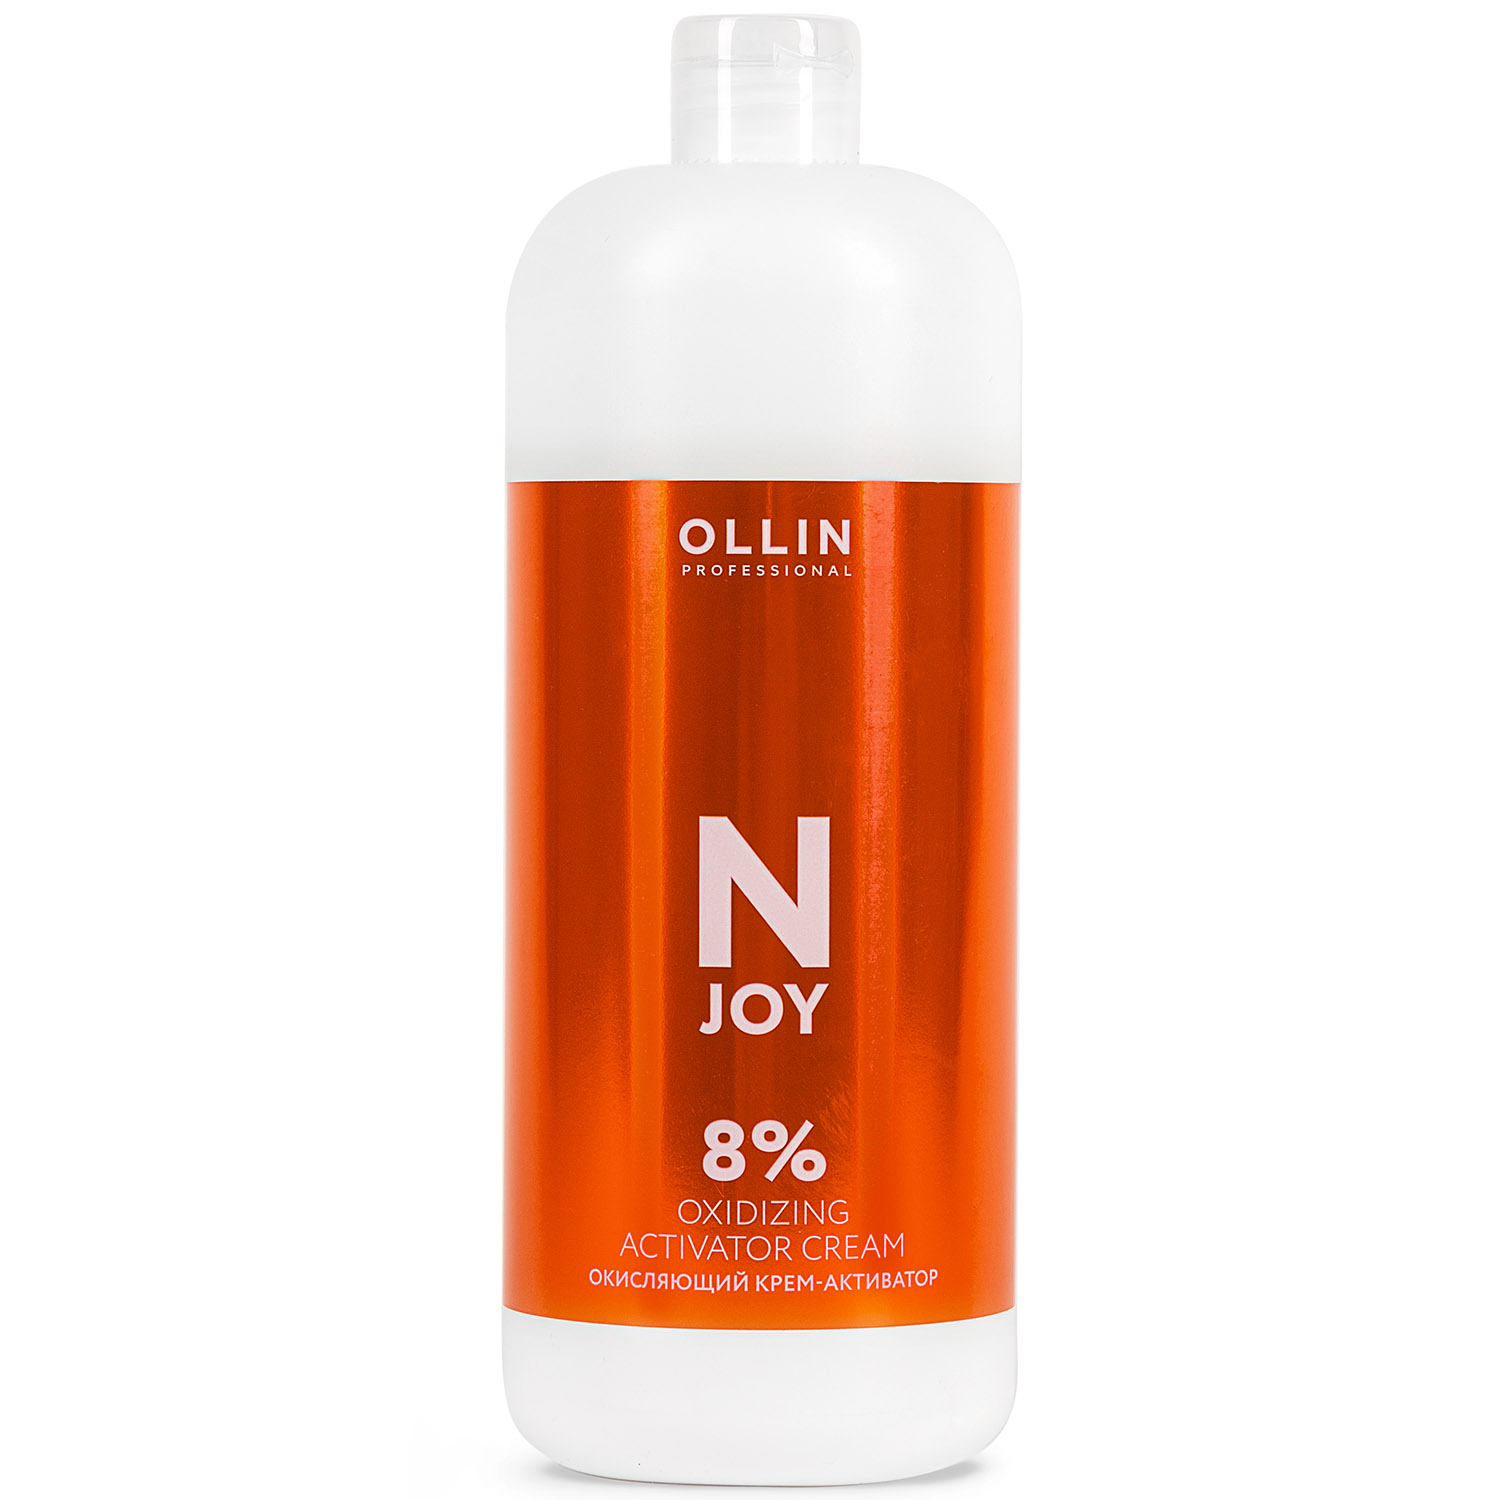 Ollin Professional Окисляющий крем-активатор 8%, 1000 мл (Ollin Professional, N-Joy) ollin окисляющий крем активатор n joy 8% 1 л